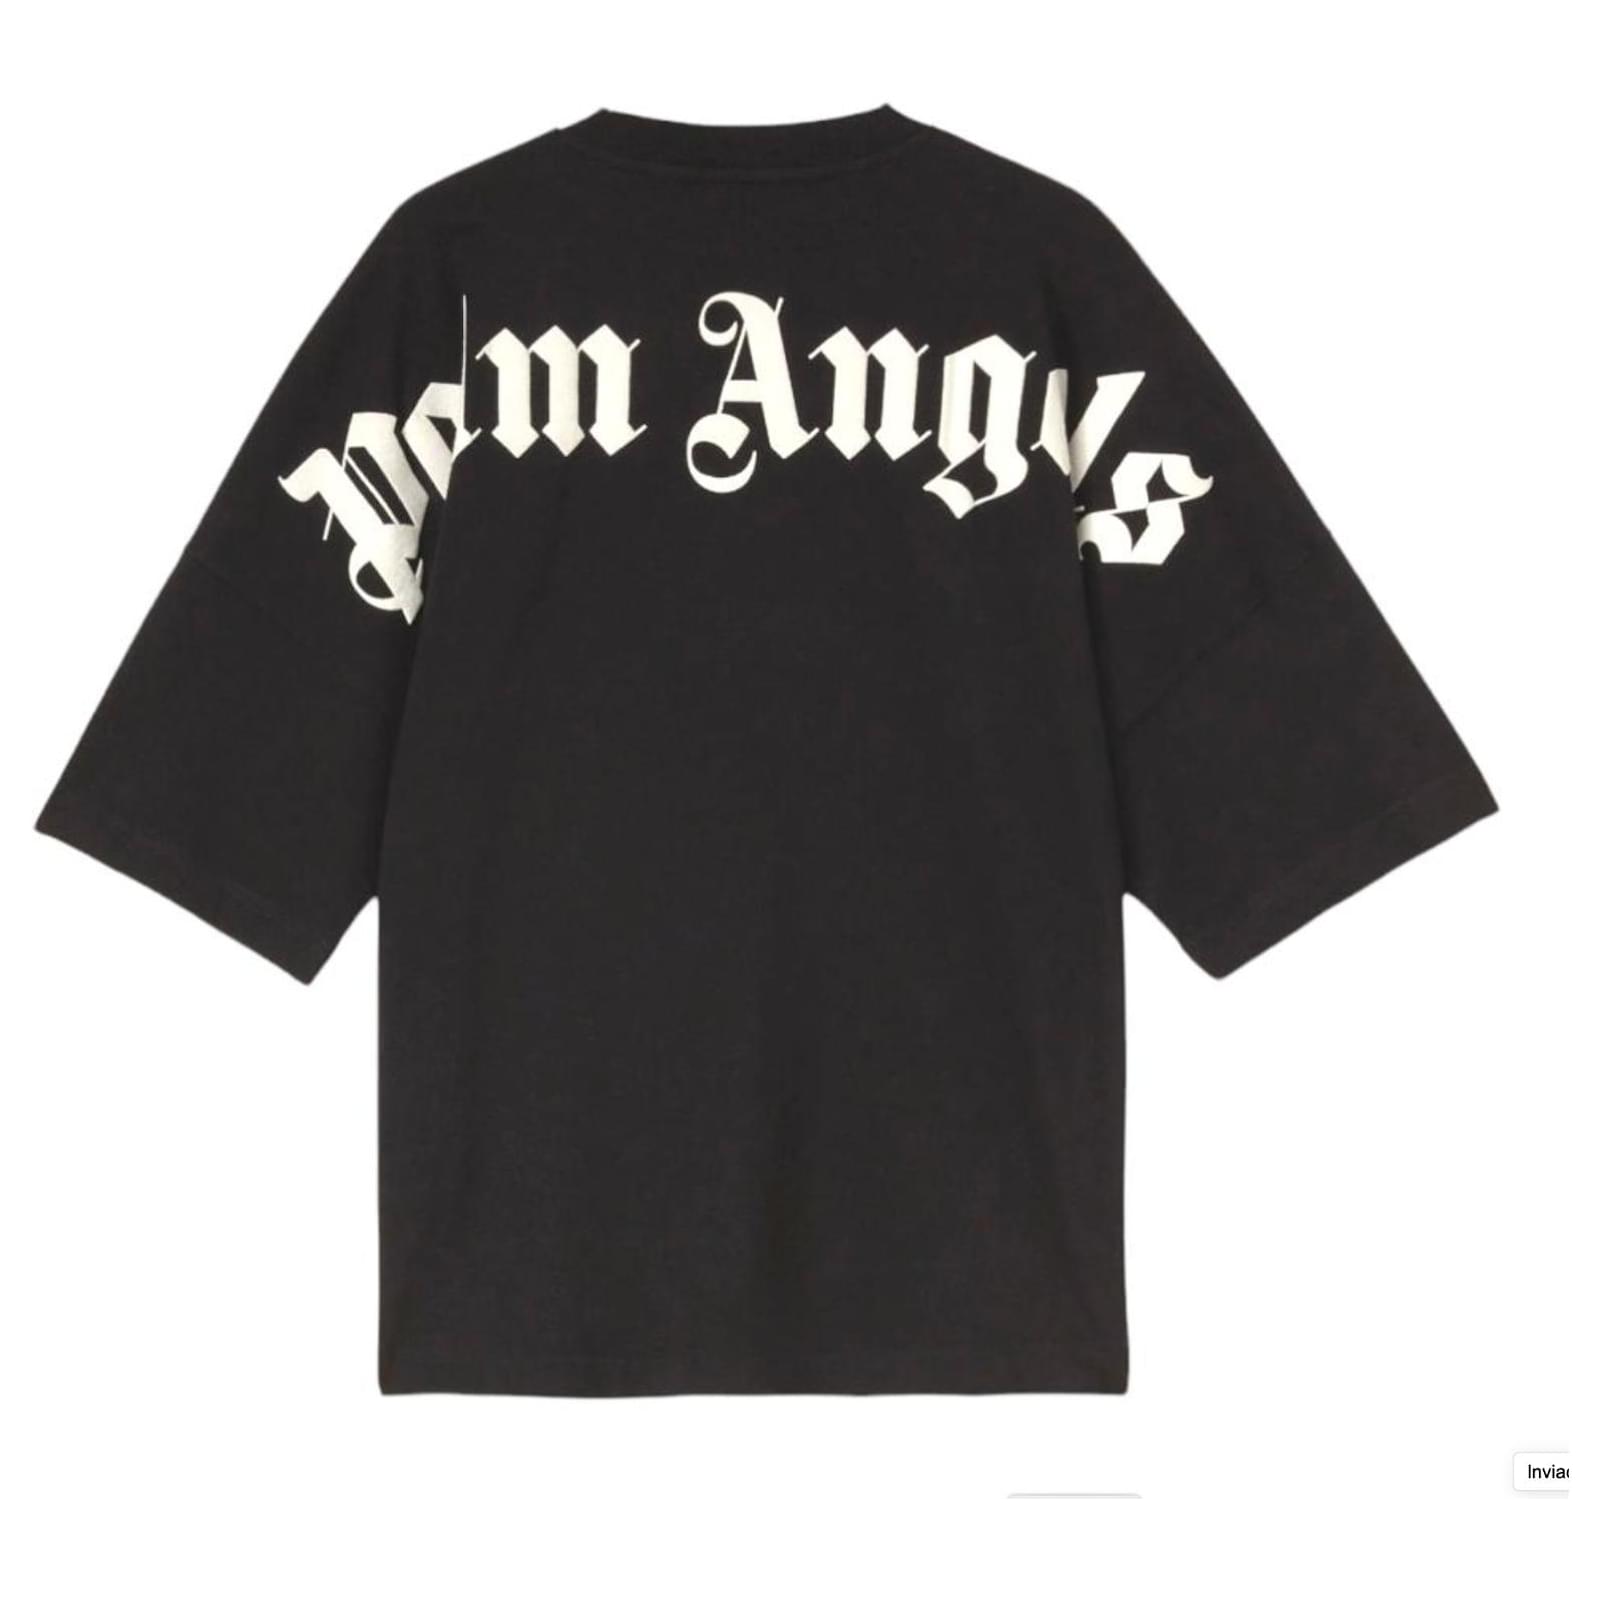 Palm Angels Classic Logo Black Cotton T-Shirt